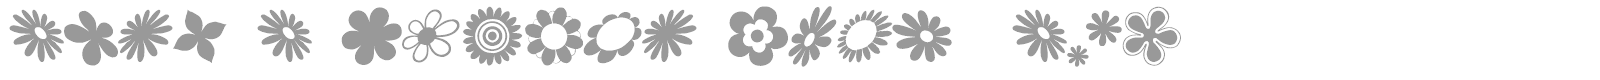 Saru's Flower Ding font preview